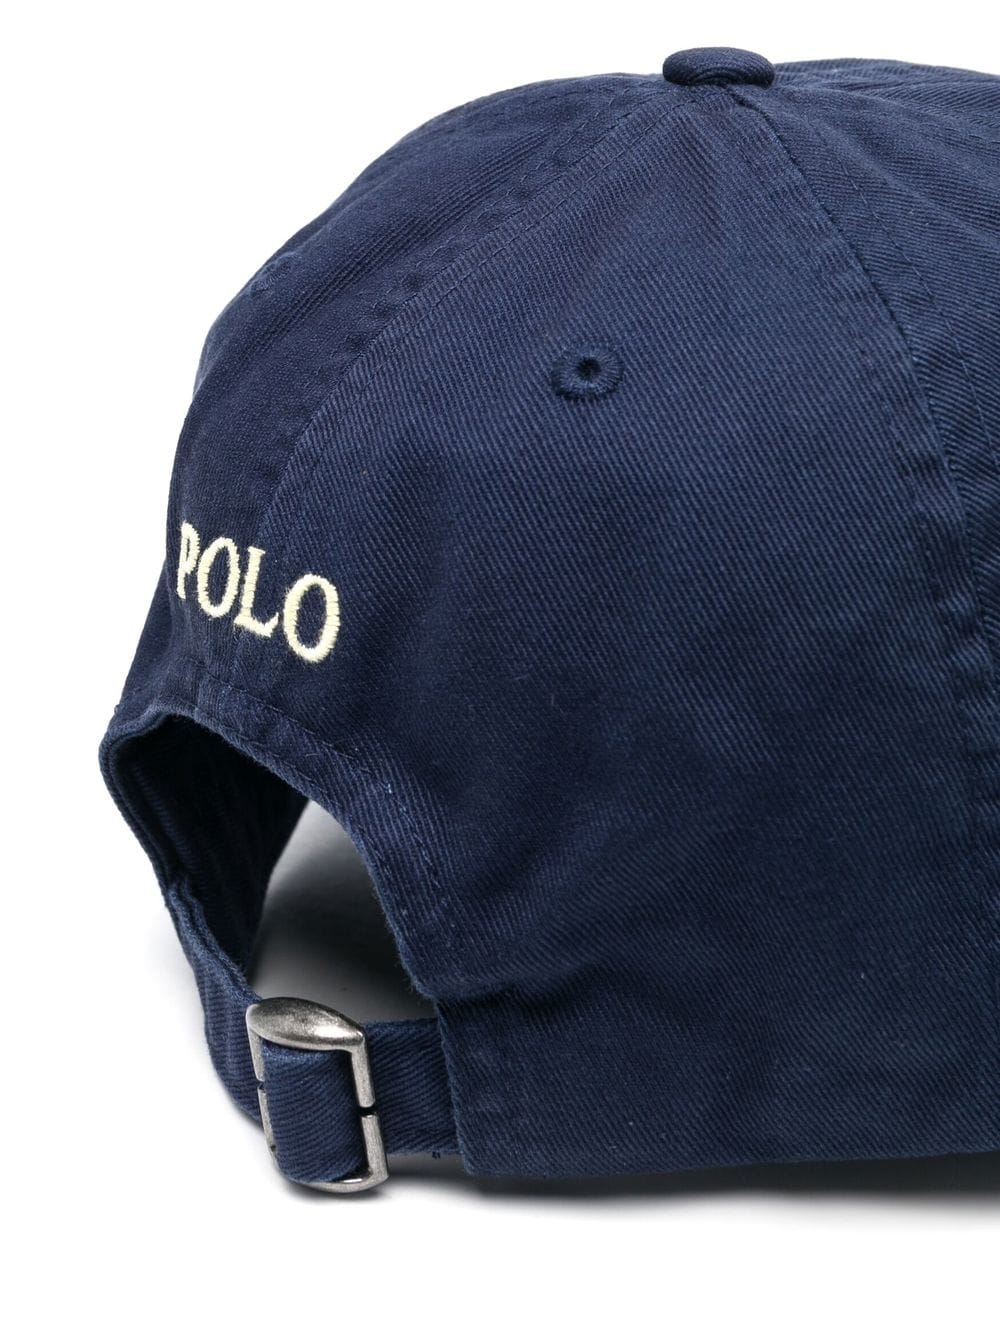 'Polo Pony' cotton baseball cap